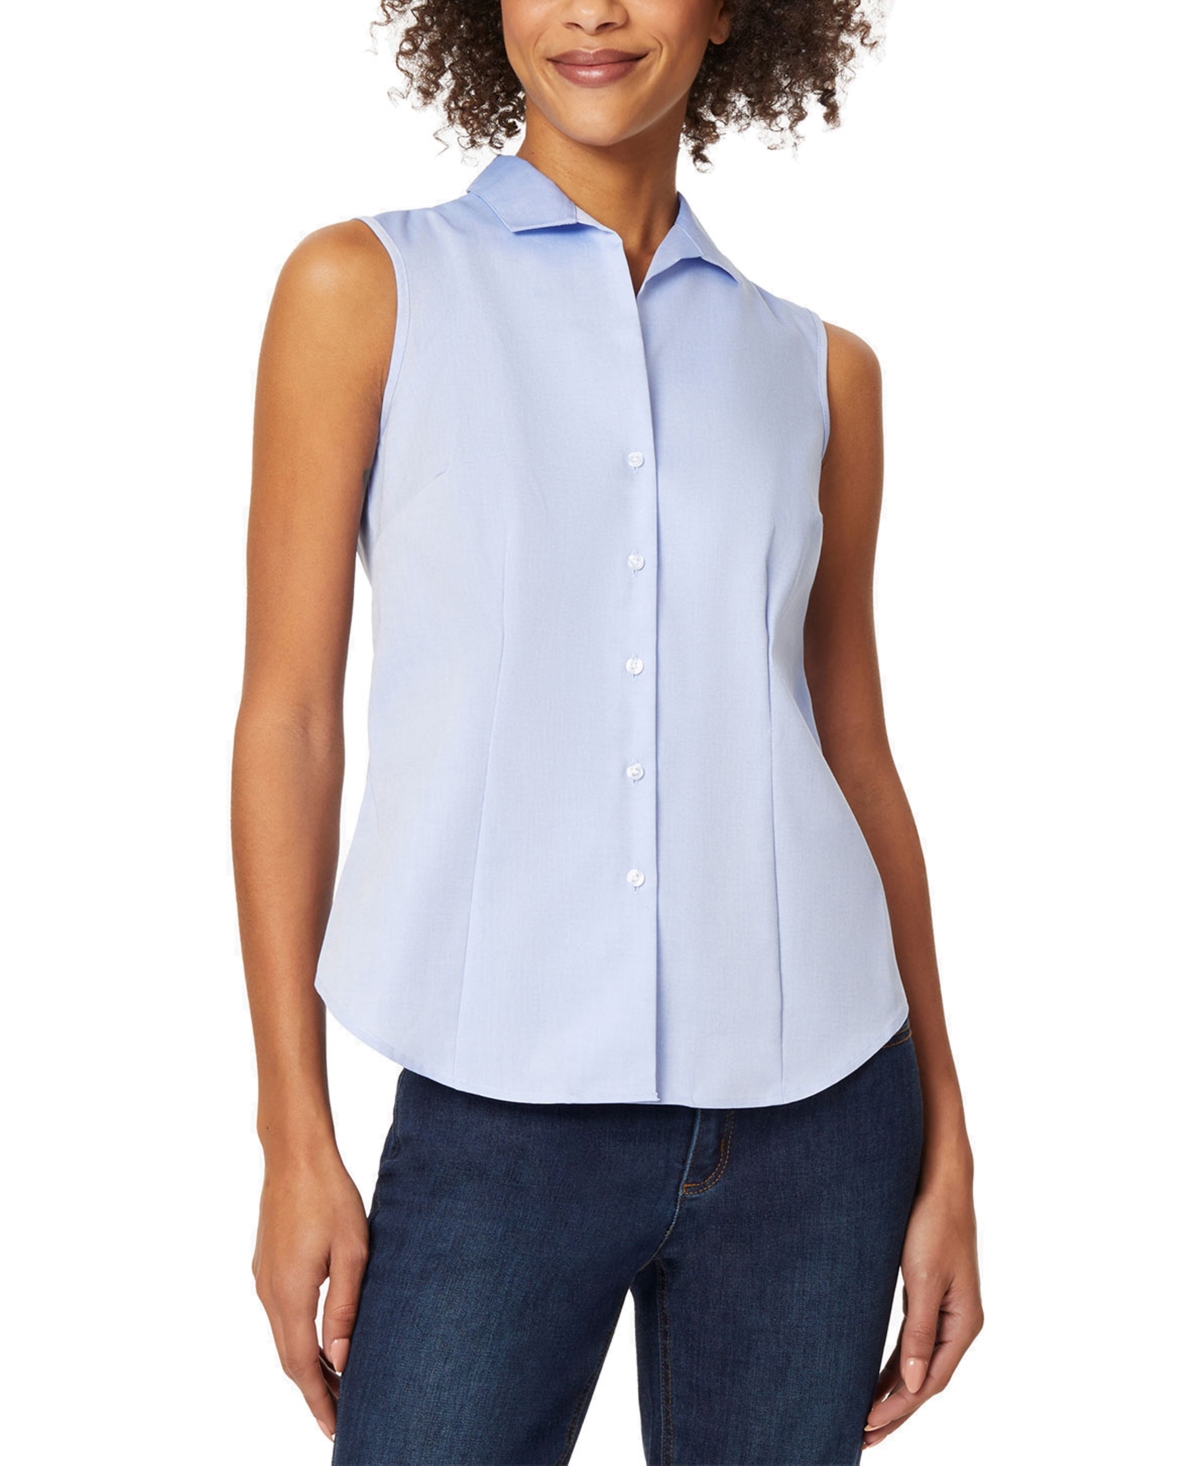 Jones New York Women's Cotton Easy-Care Sleeveless Shirt